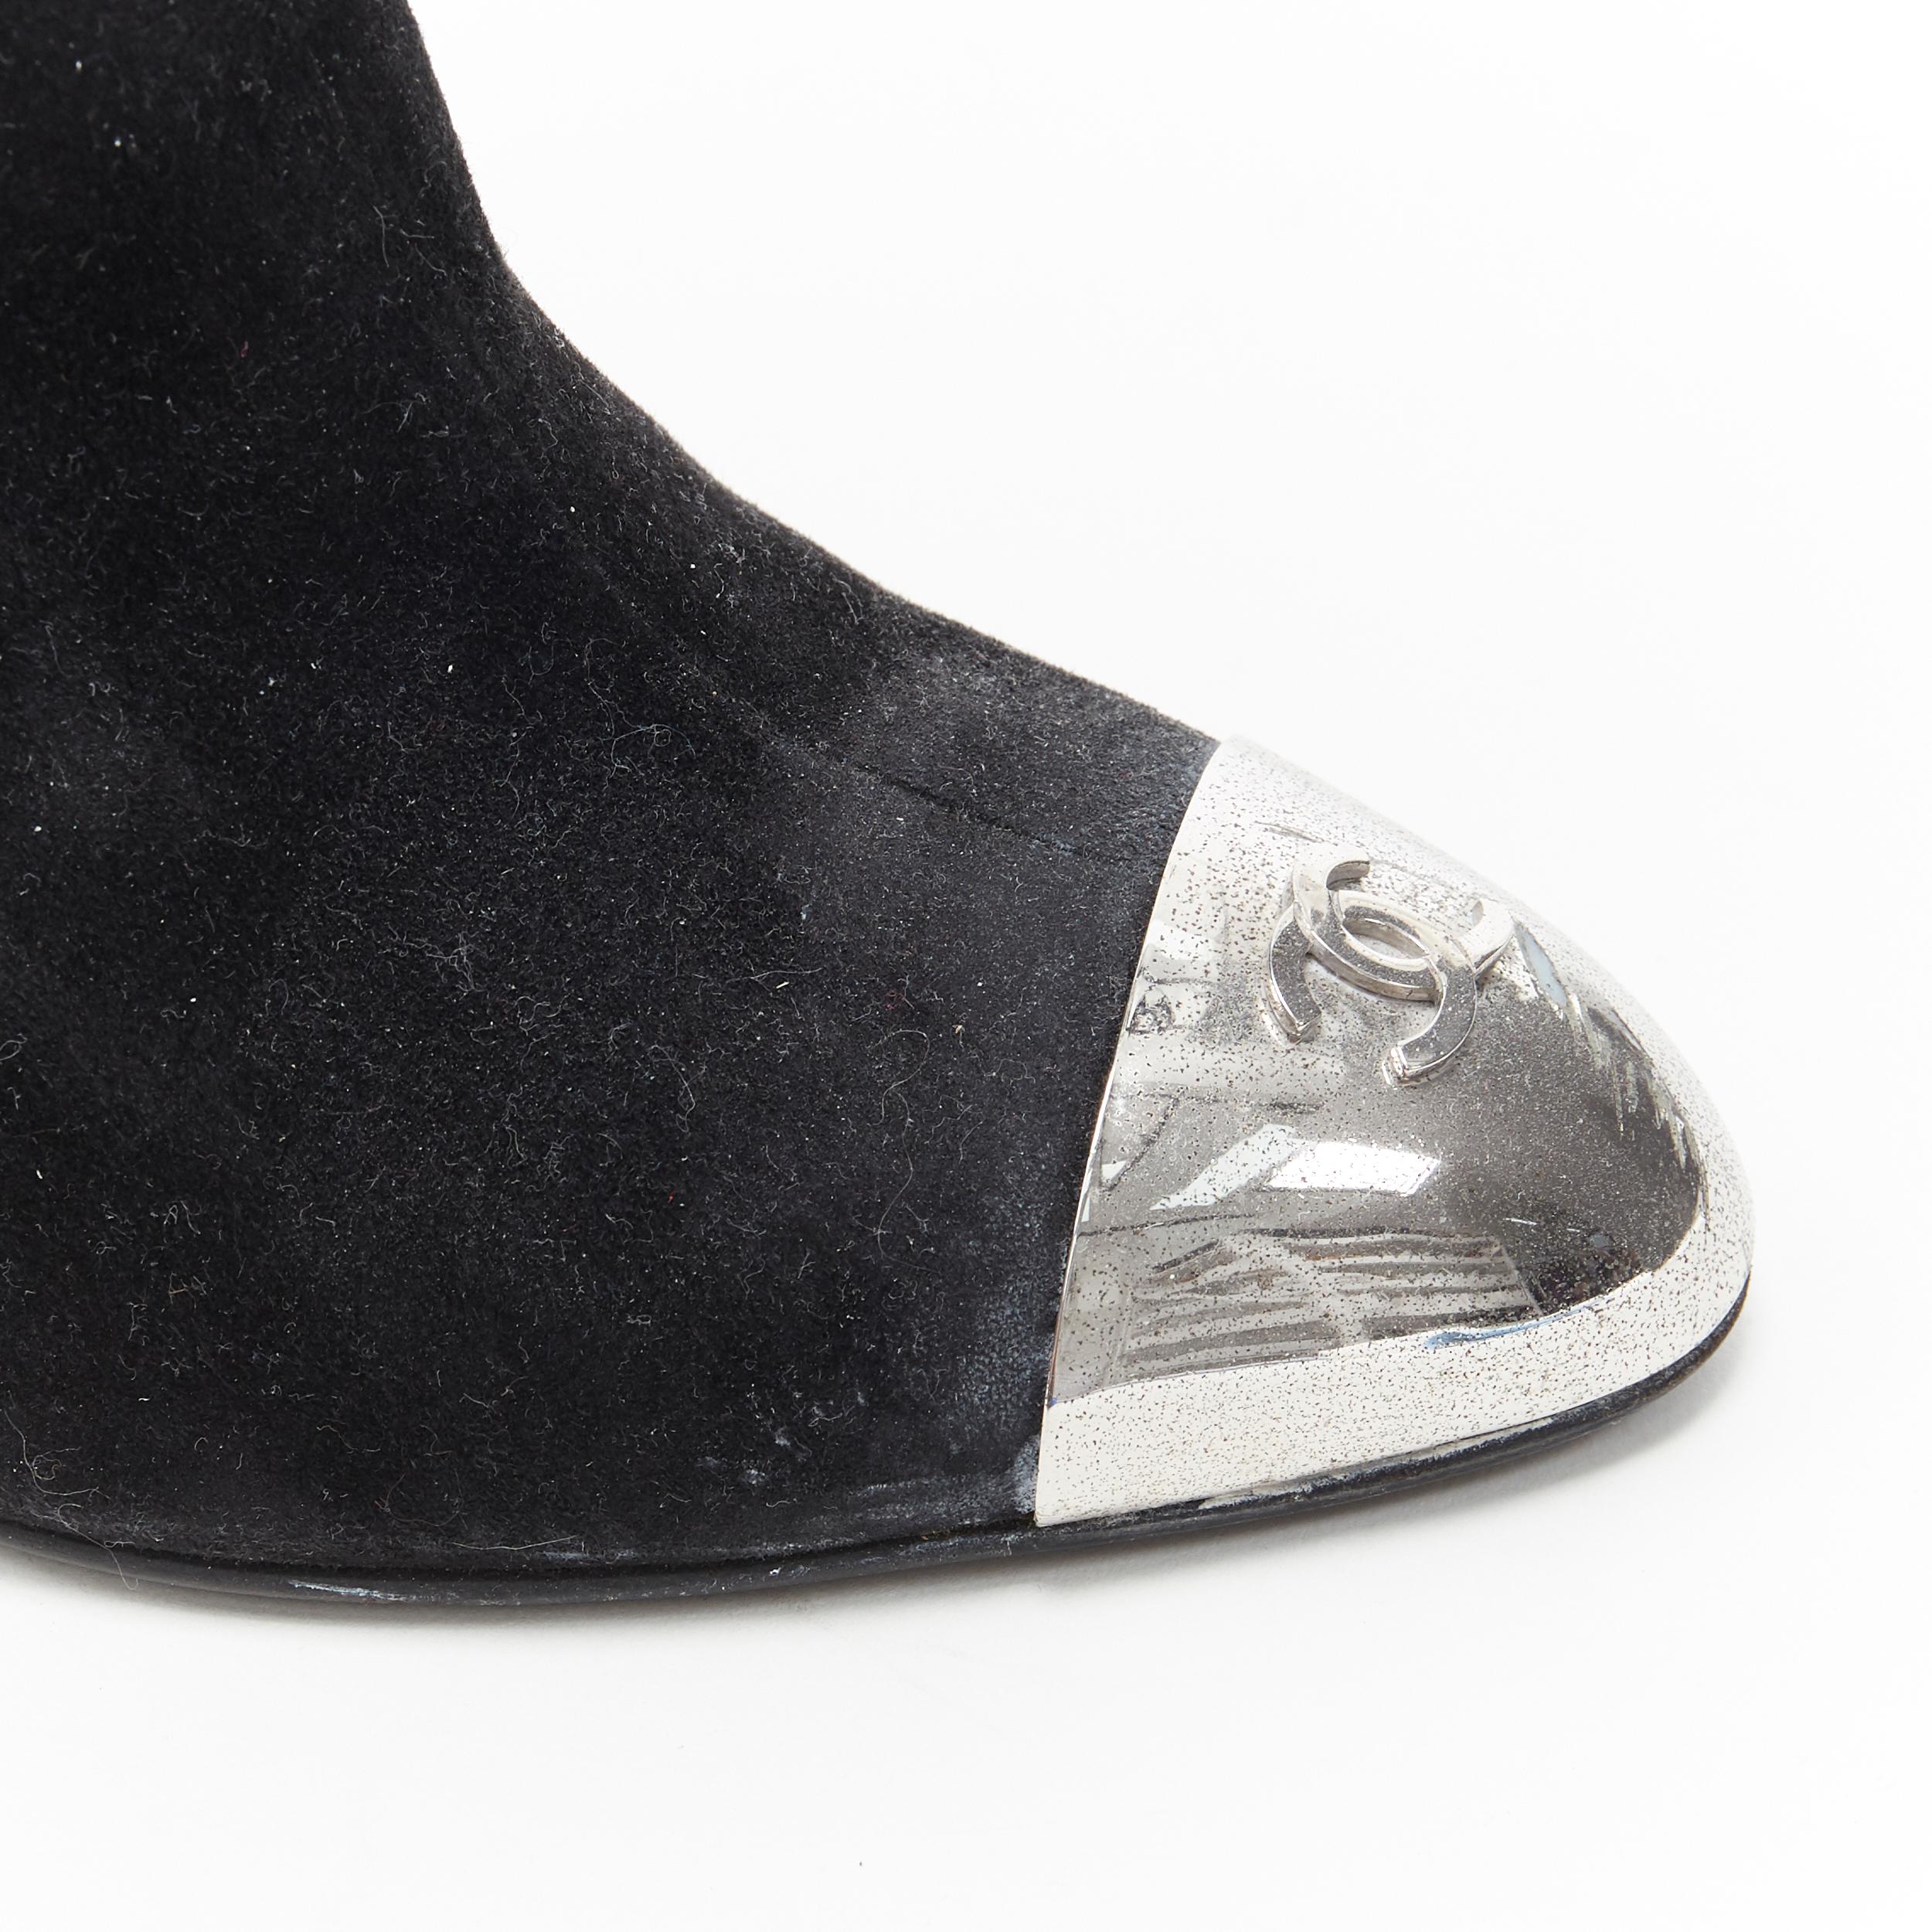 CHANEL black suede silver CC metal toe cap high heel ankle bootie EU37.5 3